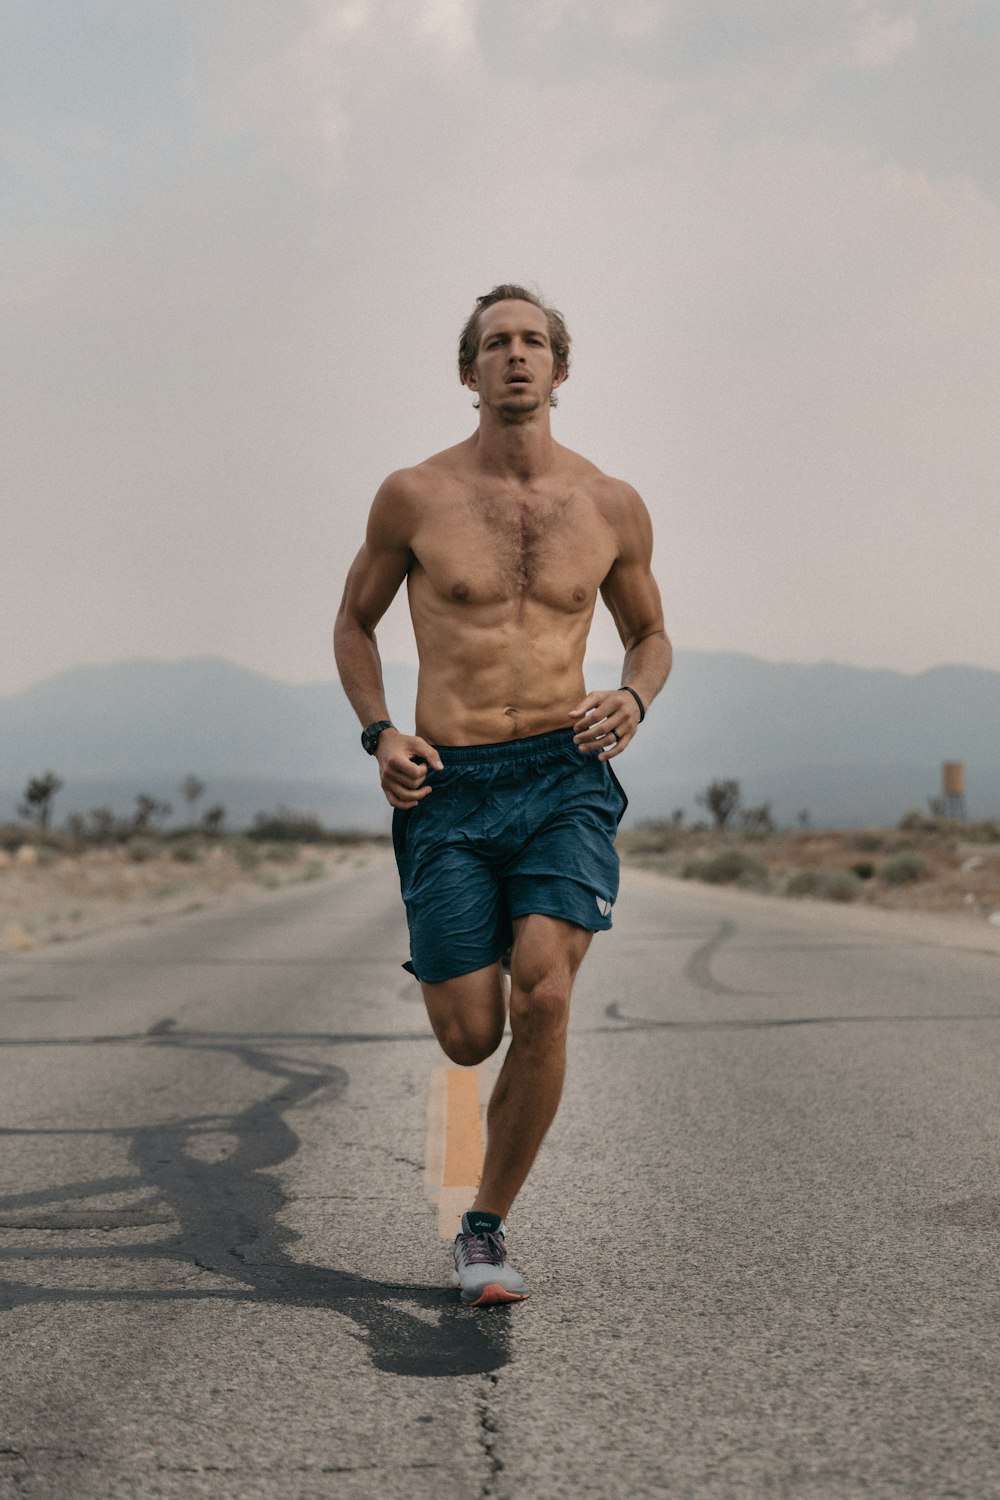 a shirtless man running down a road